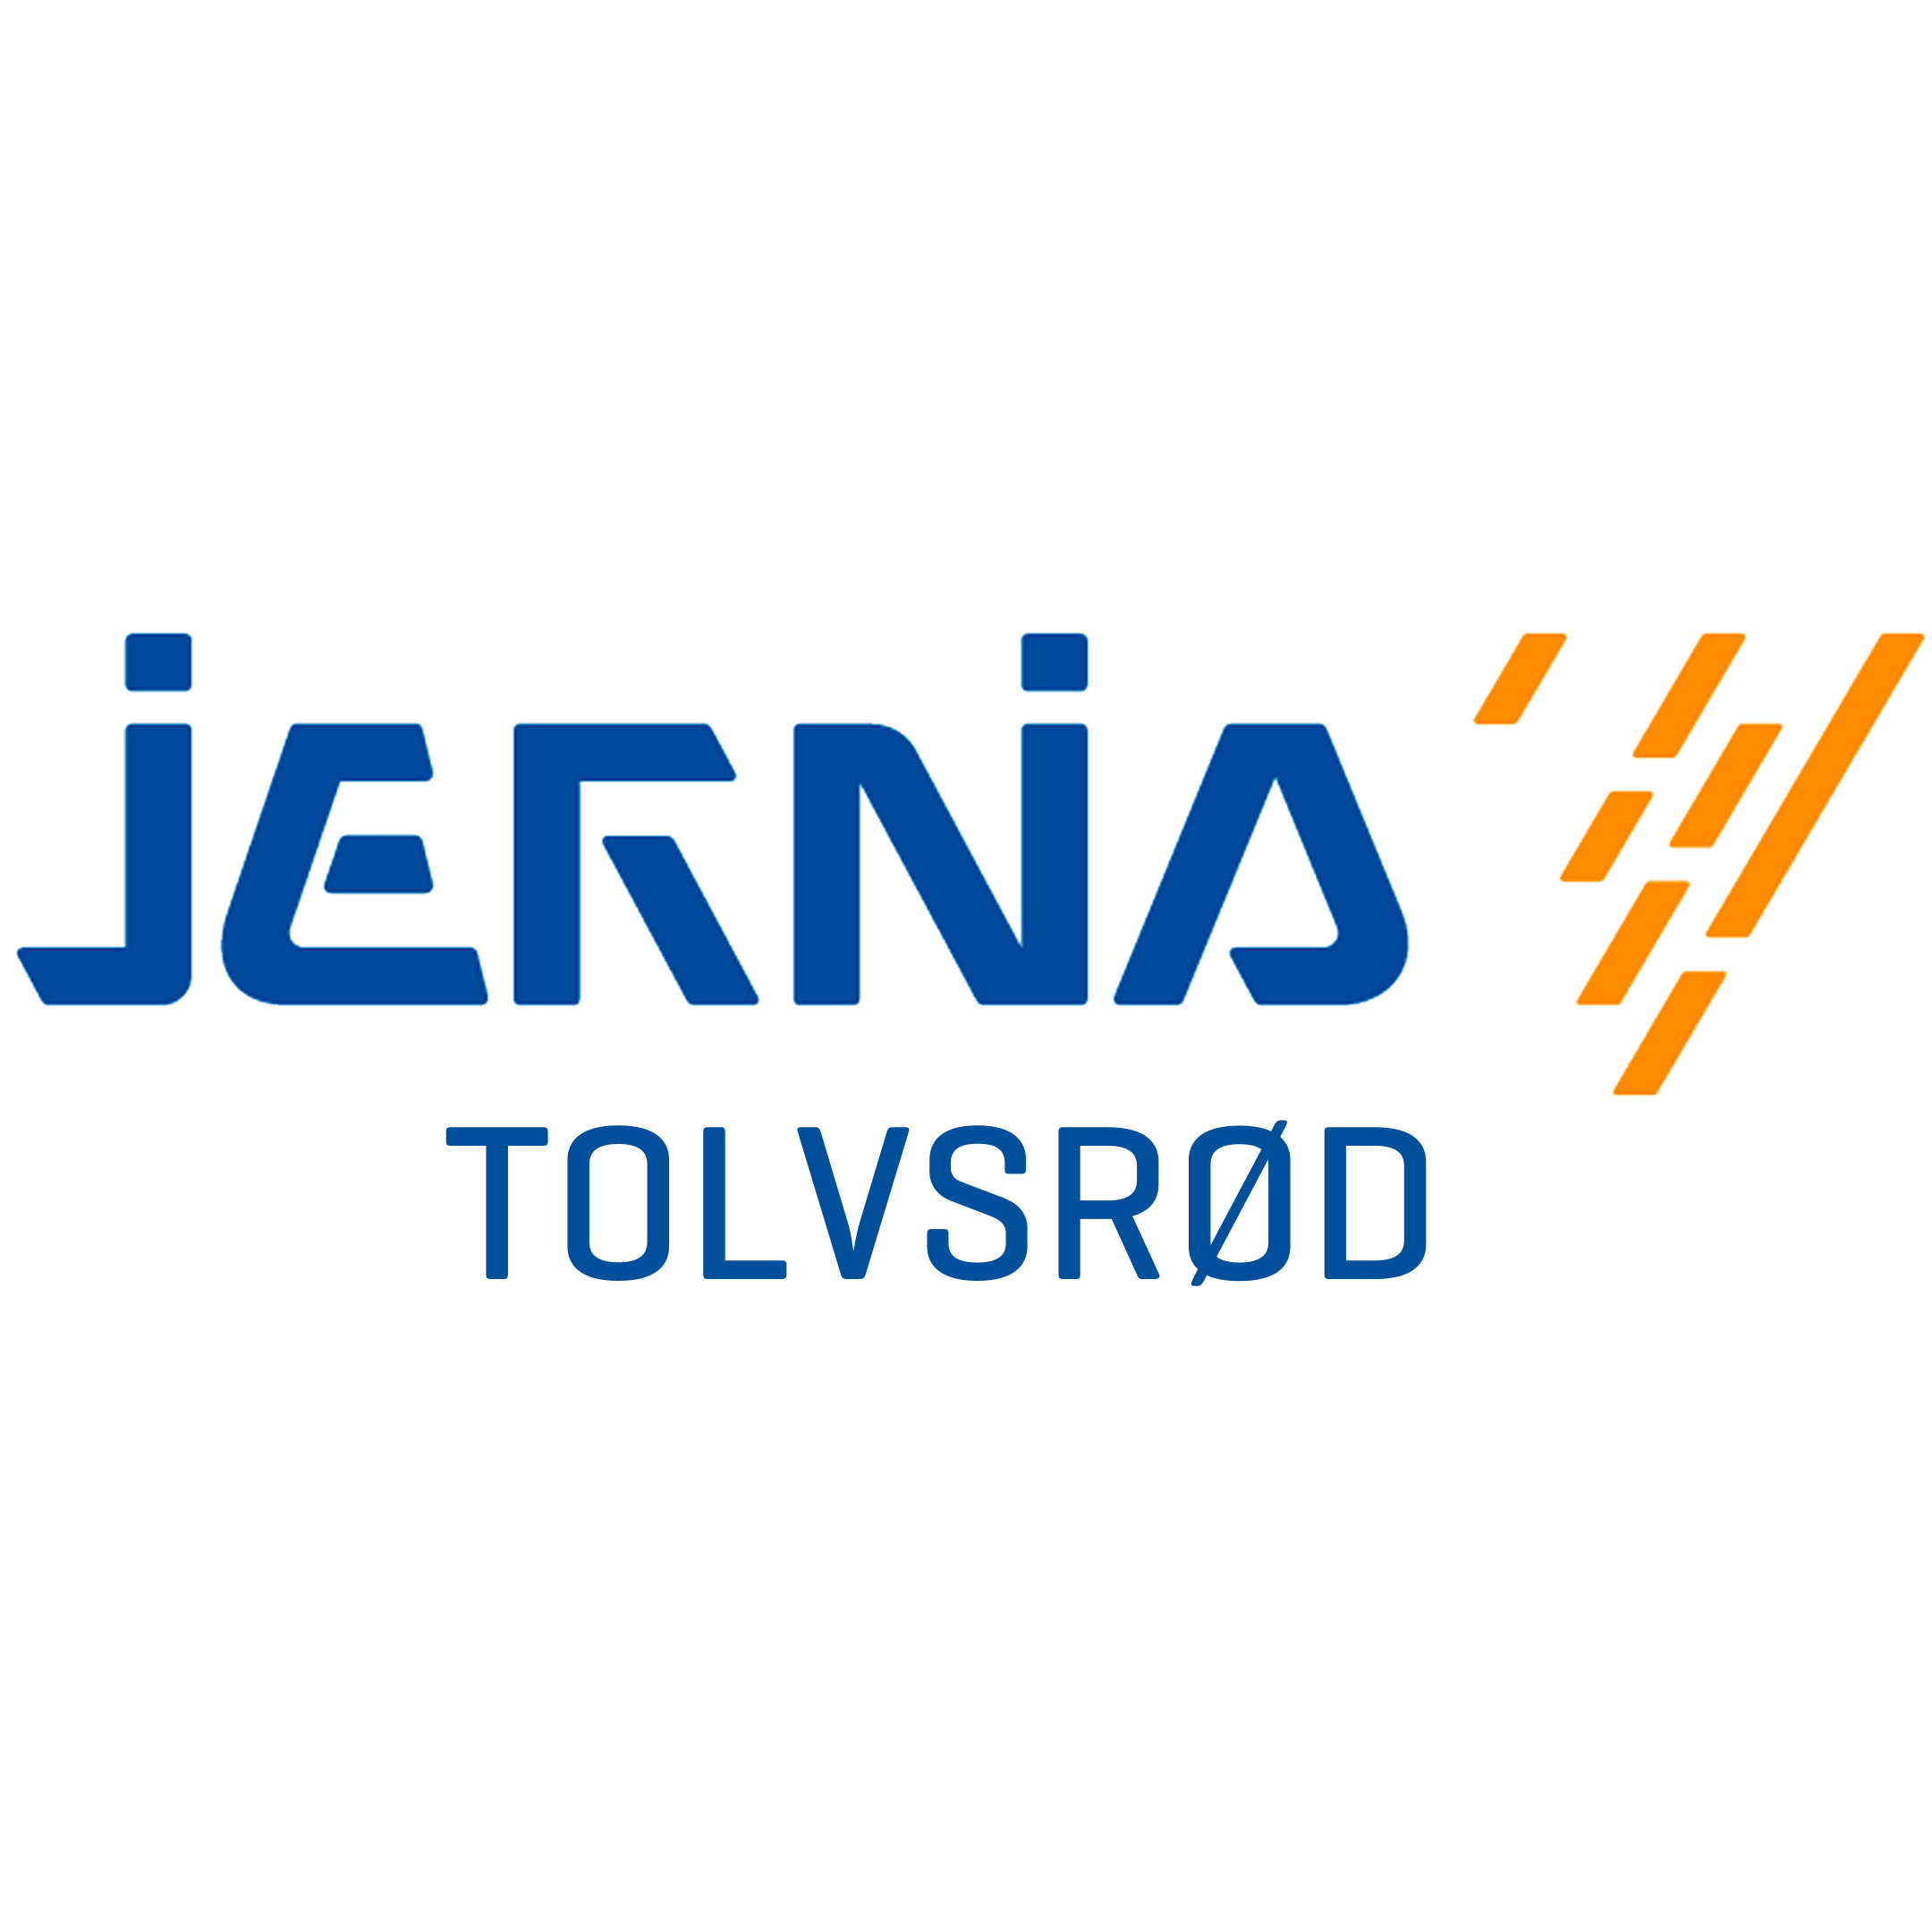 Jernia Tolvsrød Logo